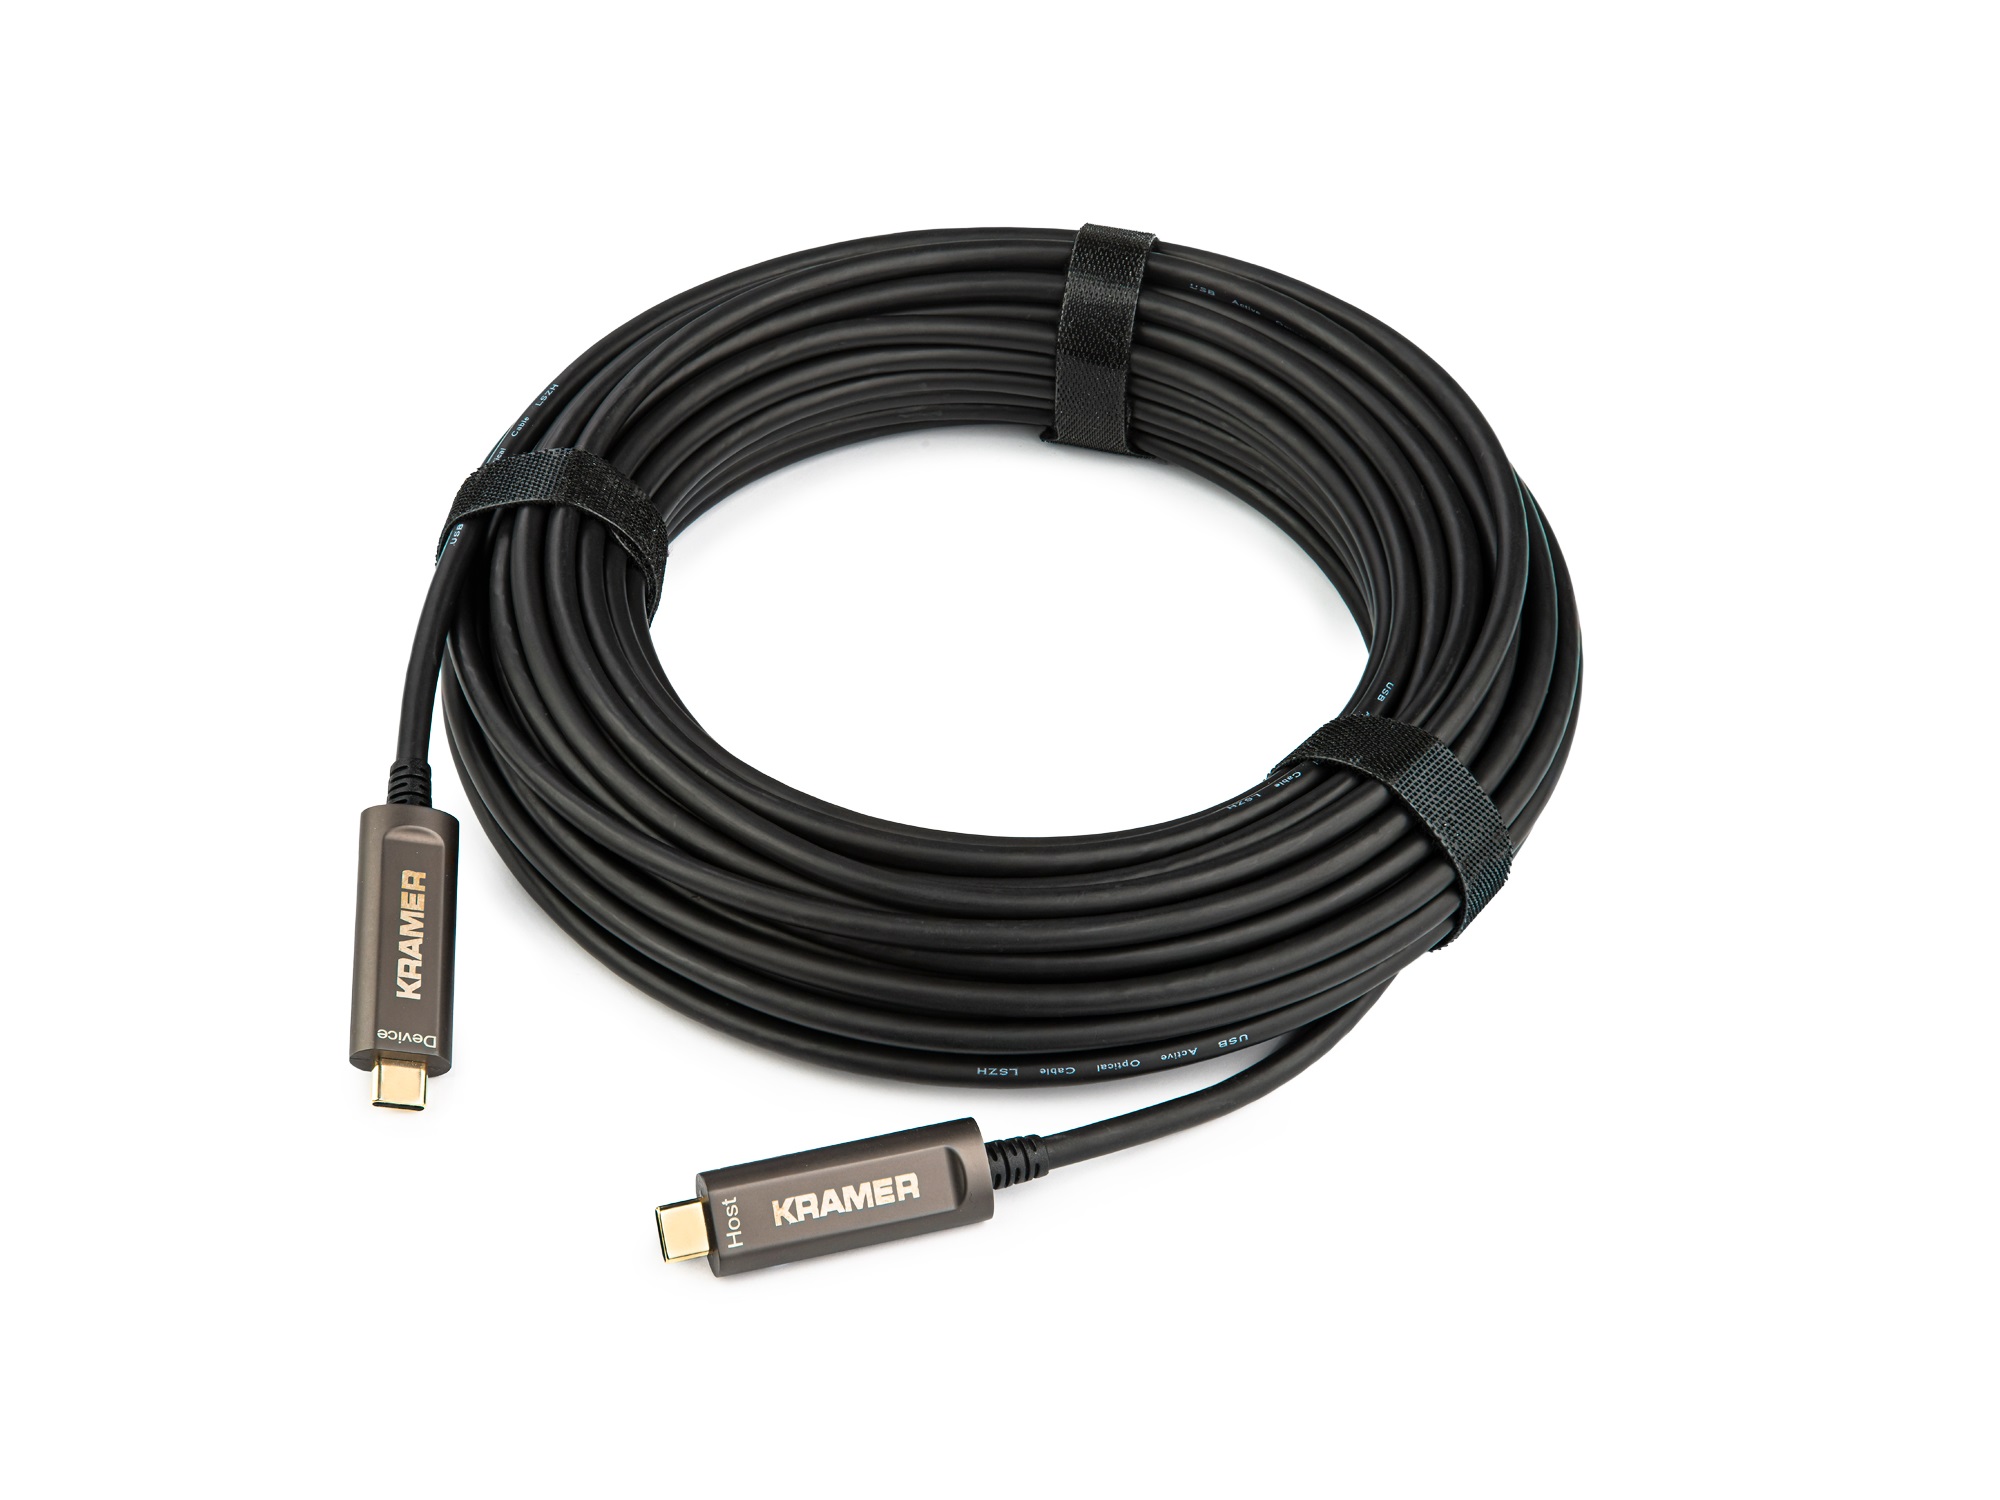 CLS-AOCU31/CC-50 15.2m (50ft) USB 3.1 GEN-2 Optical USB-C Cable by Kramer